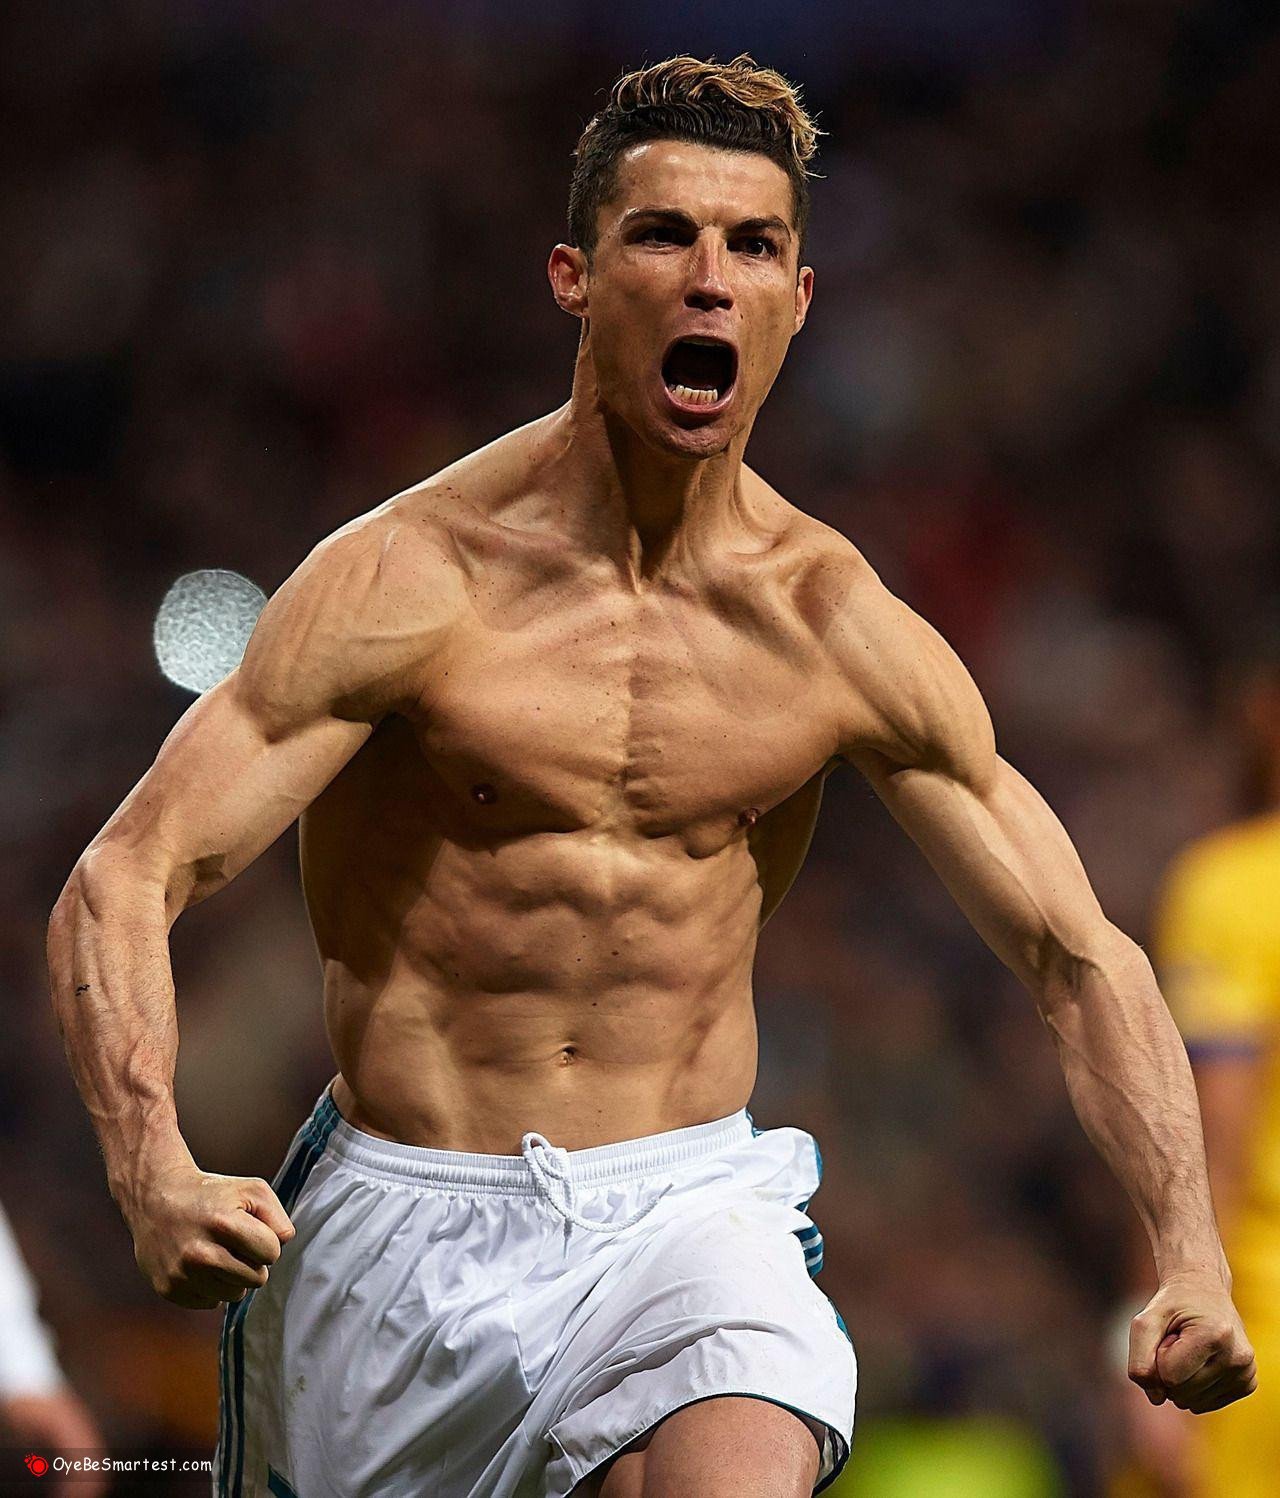 Cristiano Ronaldo Abs Photo Full HD Wallpaper. Photo